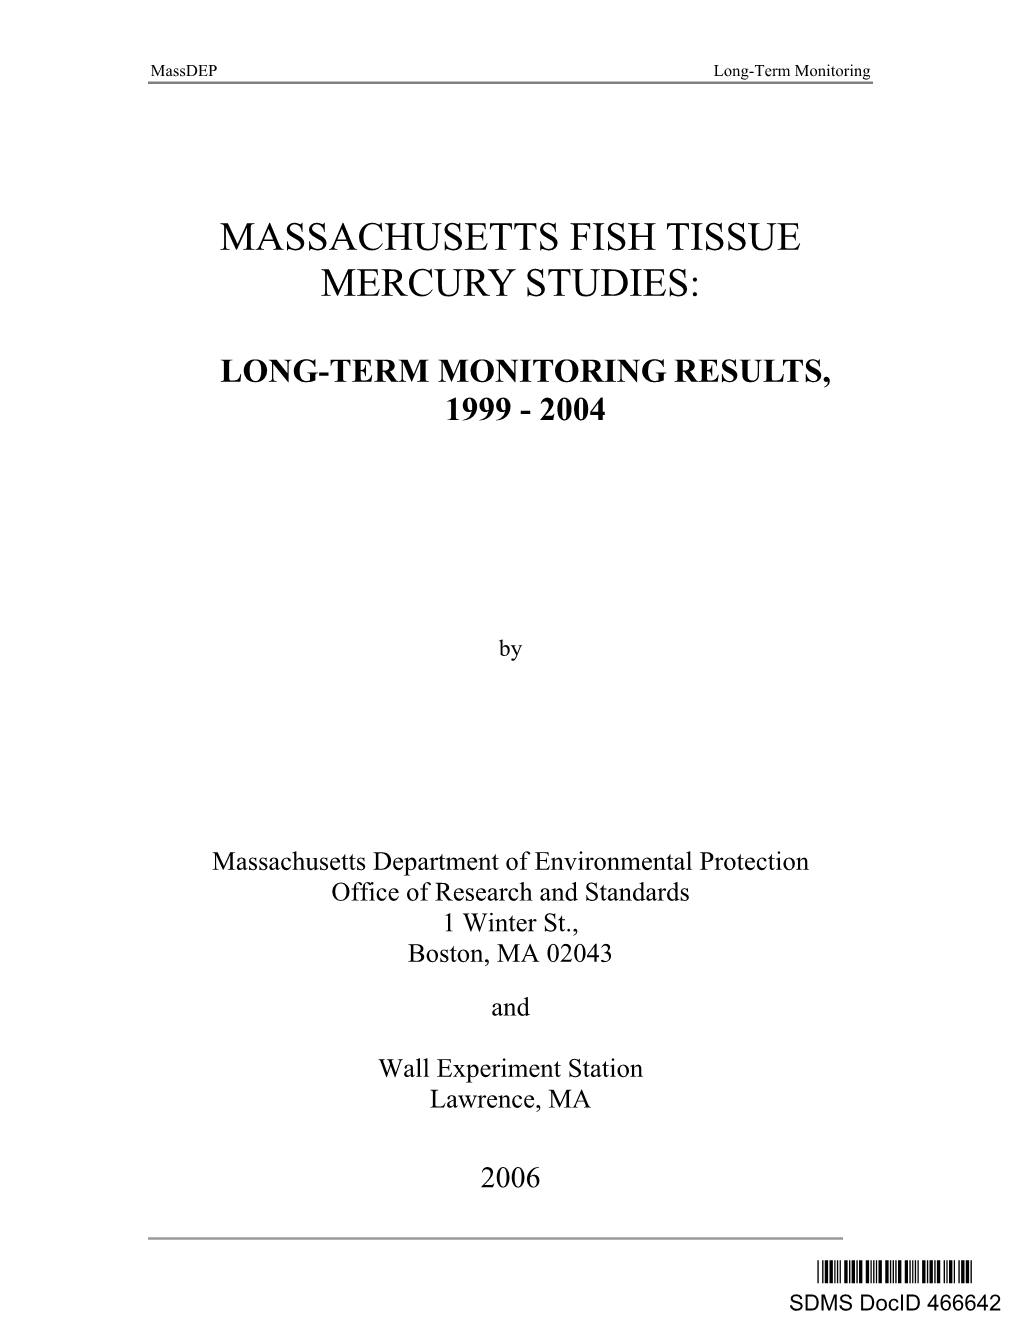 Massachusetts Fish Tissue Mercury Studies: Long-Term